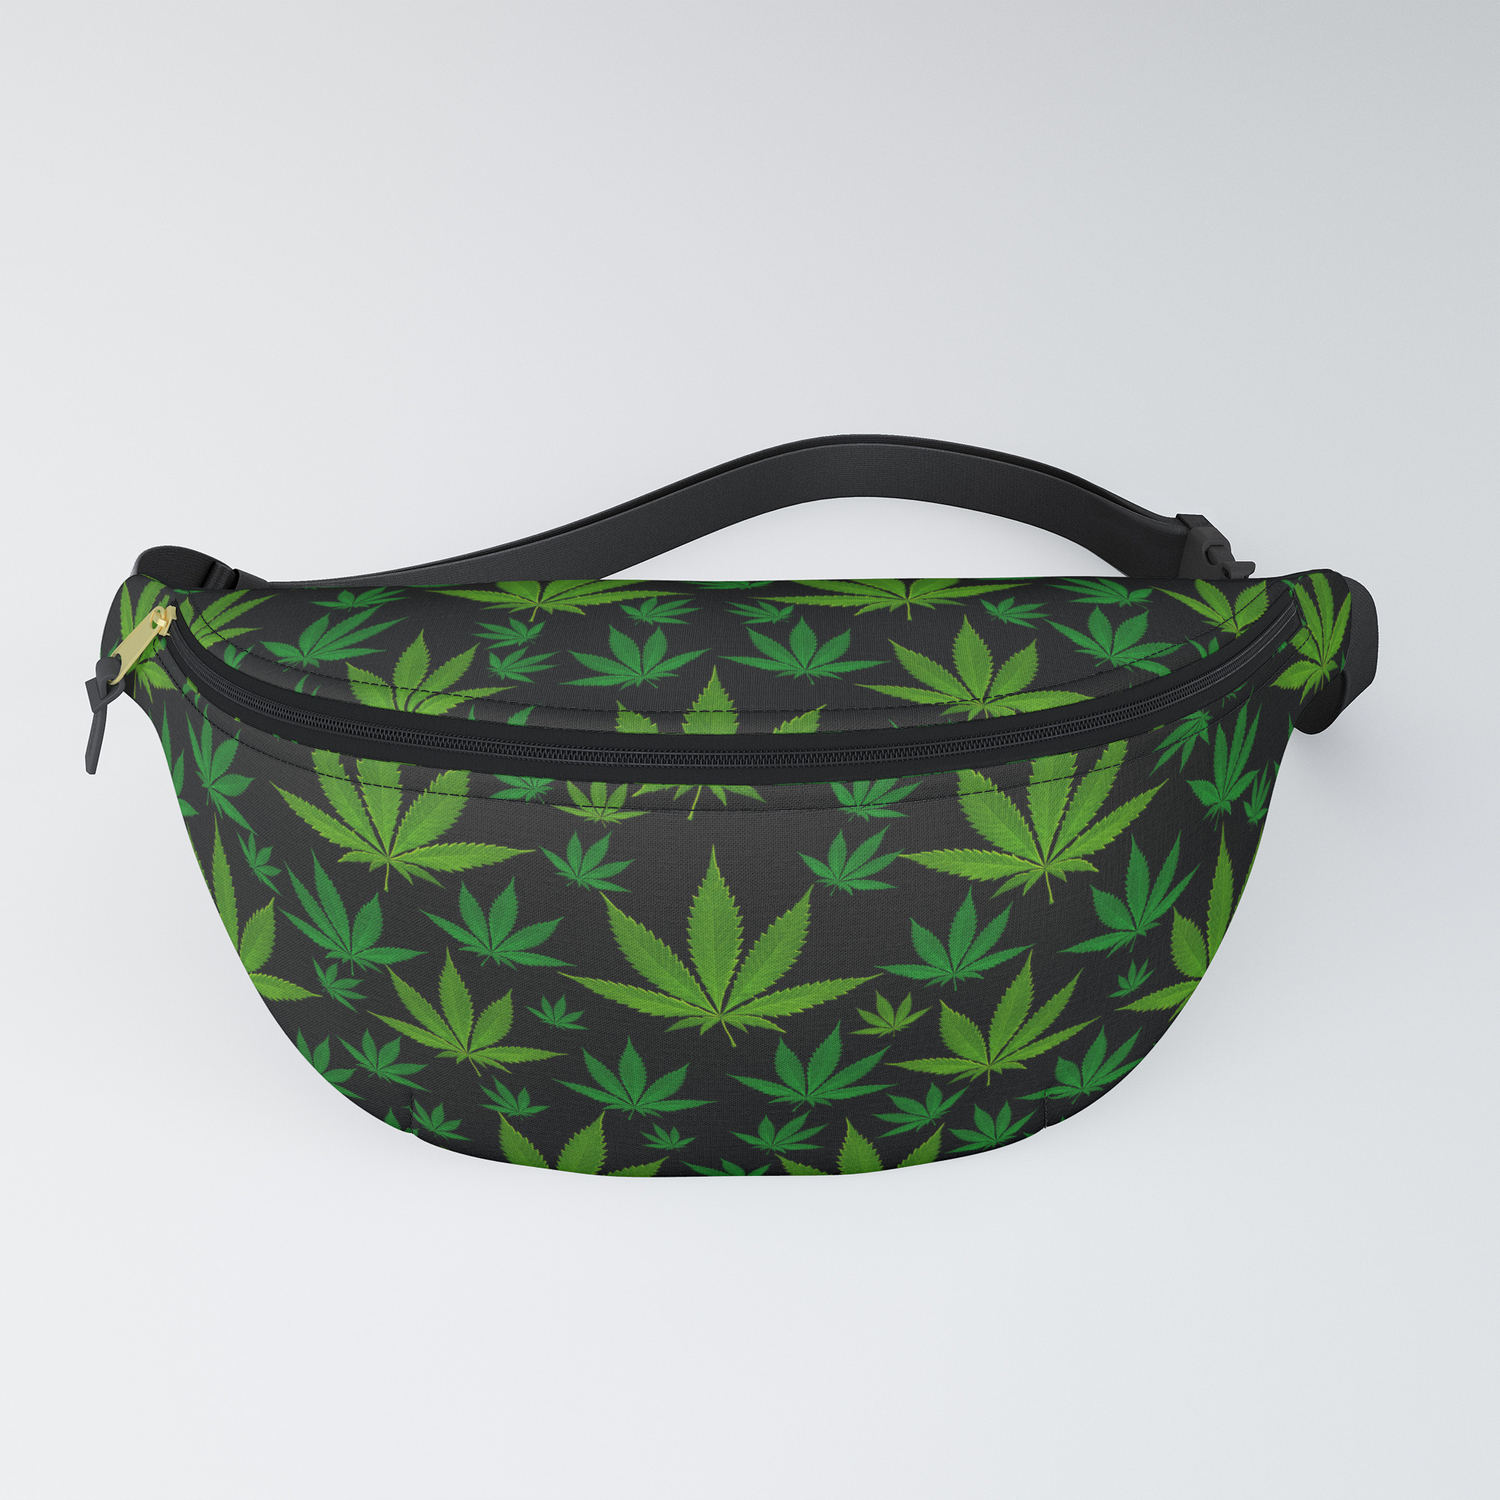 UTALY Outdoor Travel Weed Marijuana Women Waist-Bag Men Fanny-Packs Green Weed